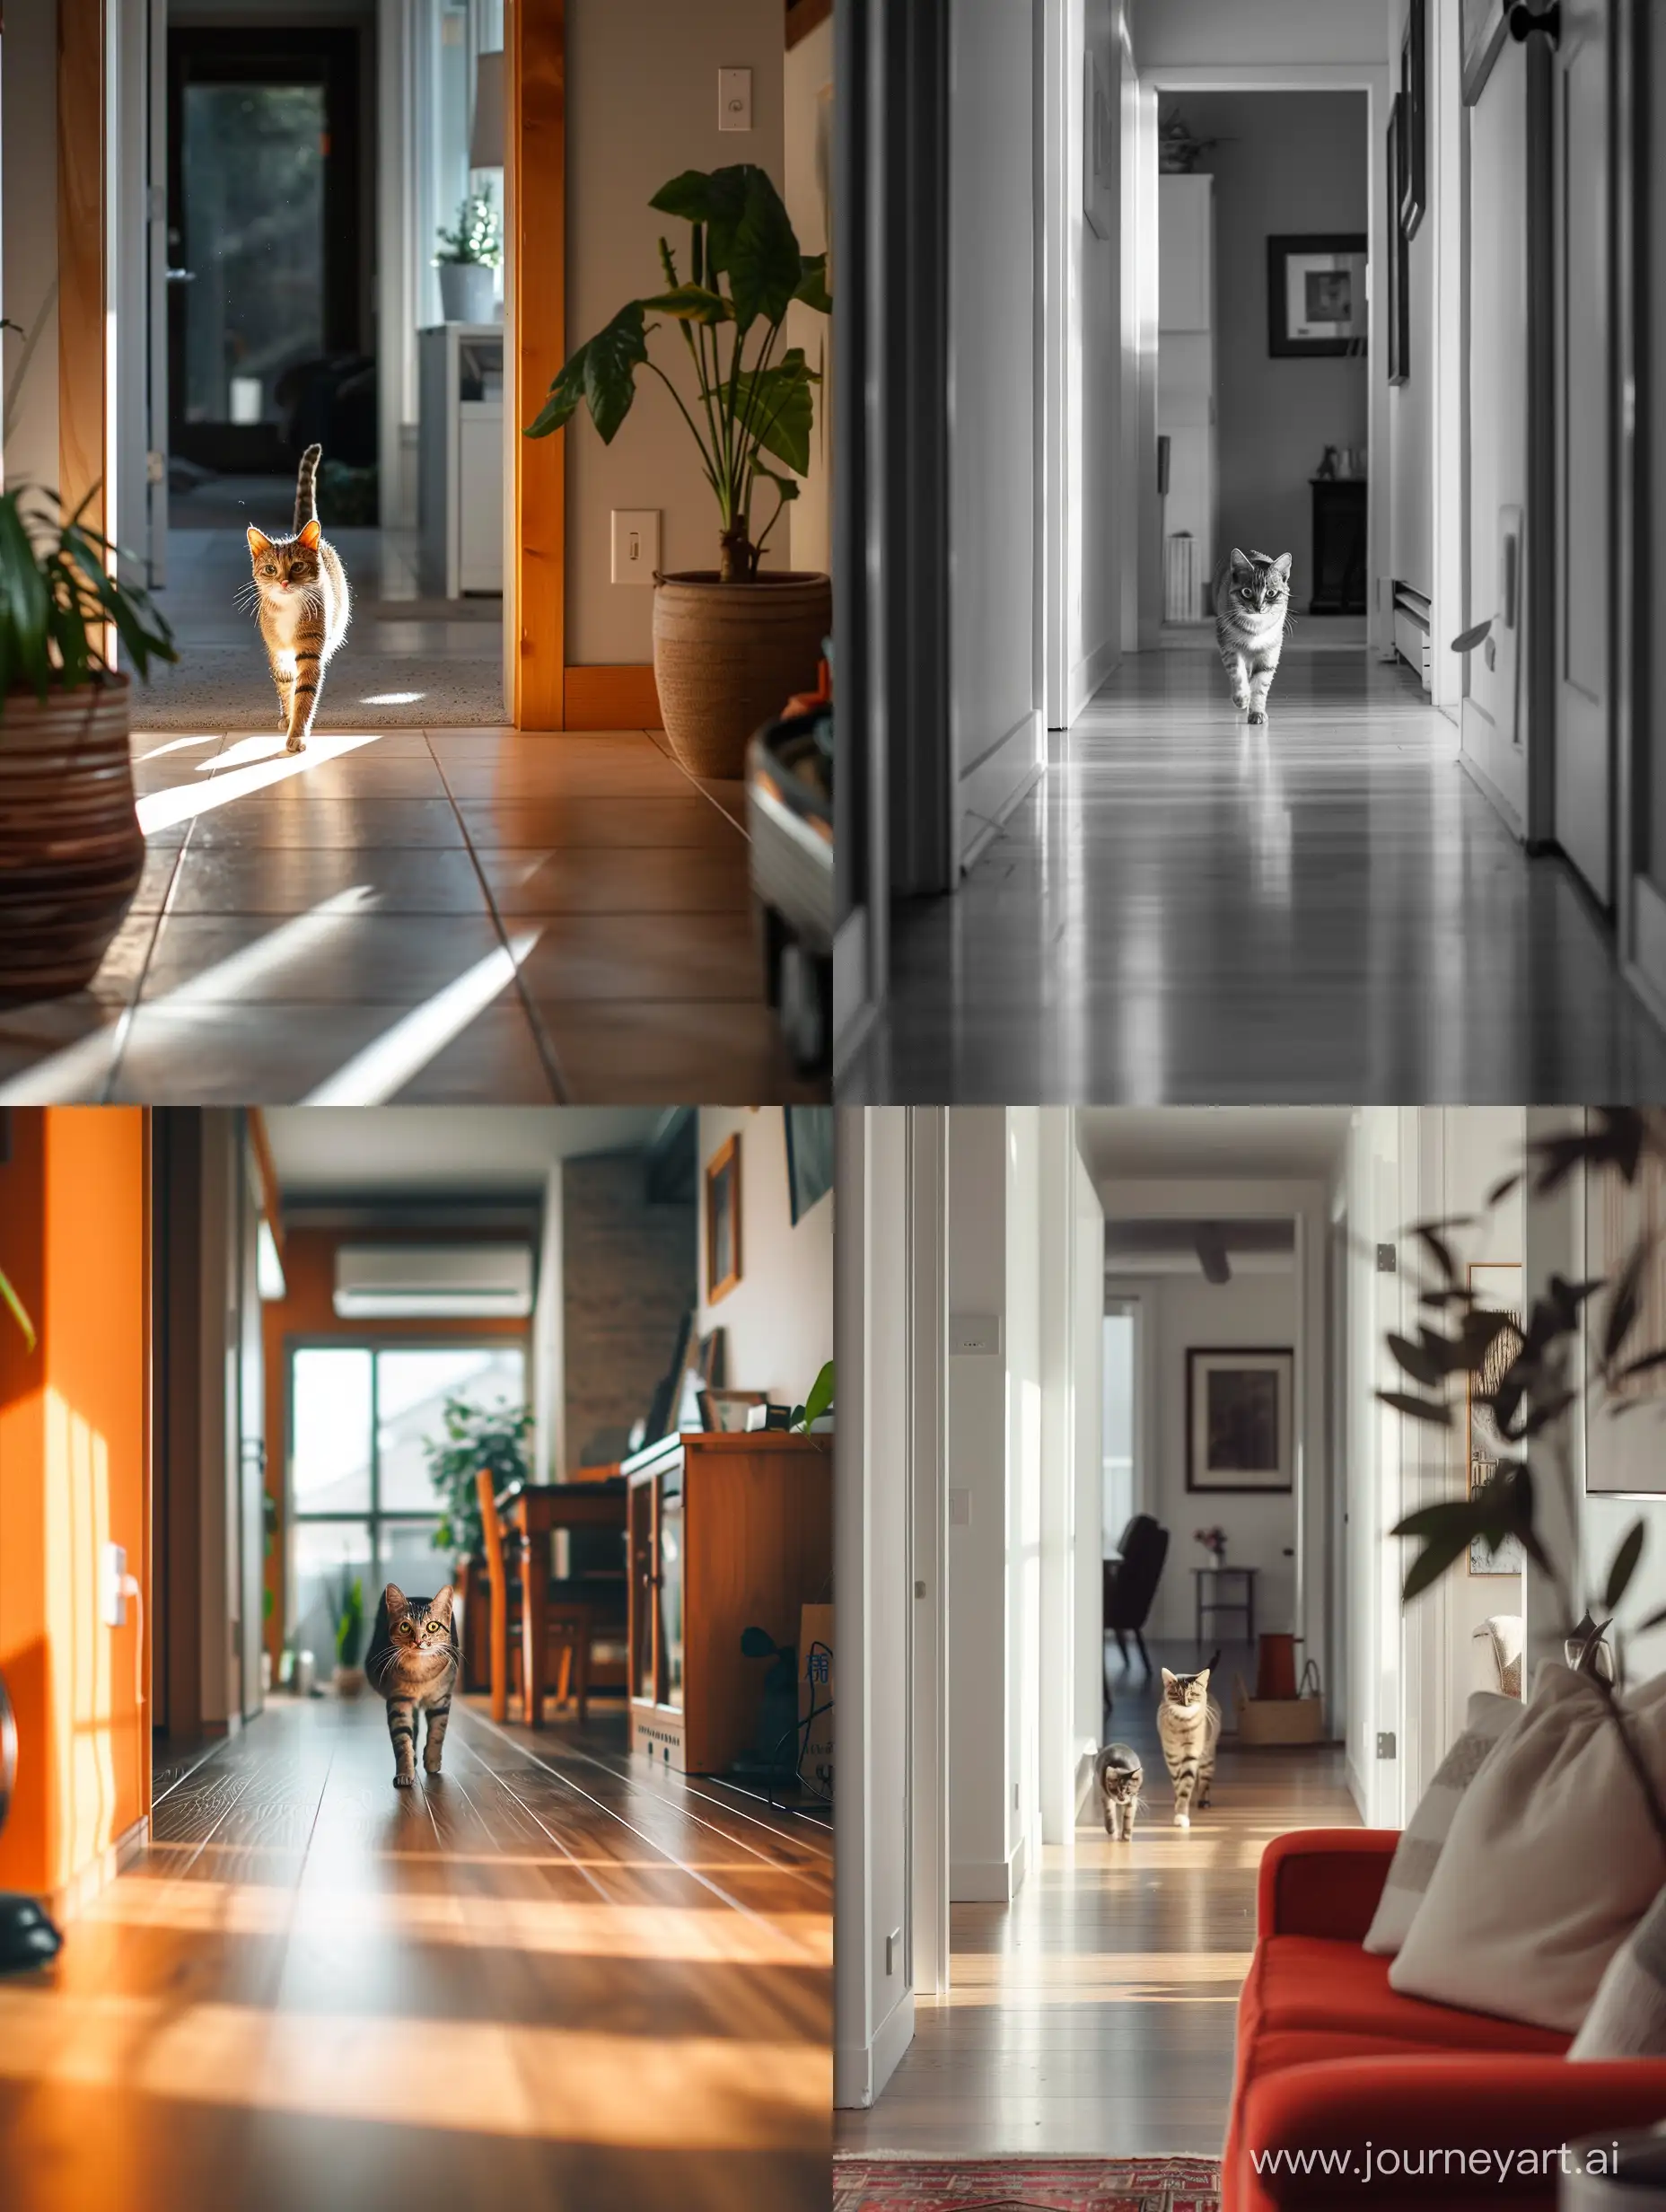 Curious-Cat-Strolling-Through-Home-Corridor